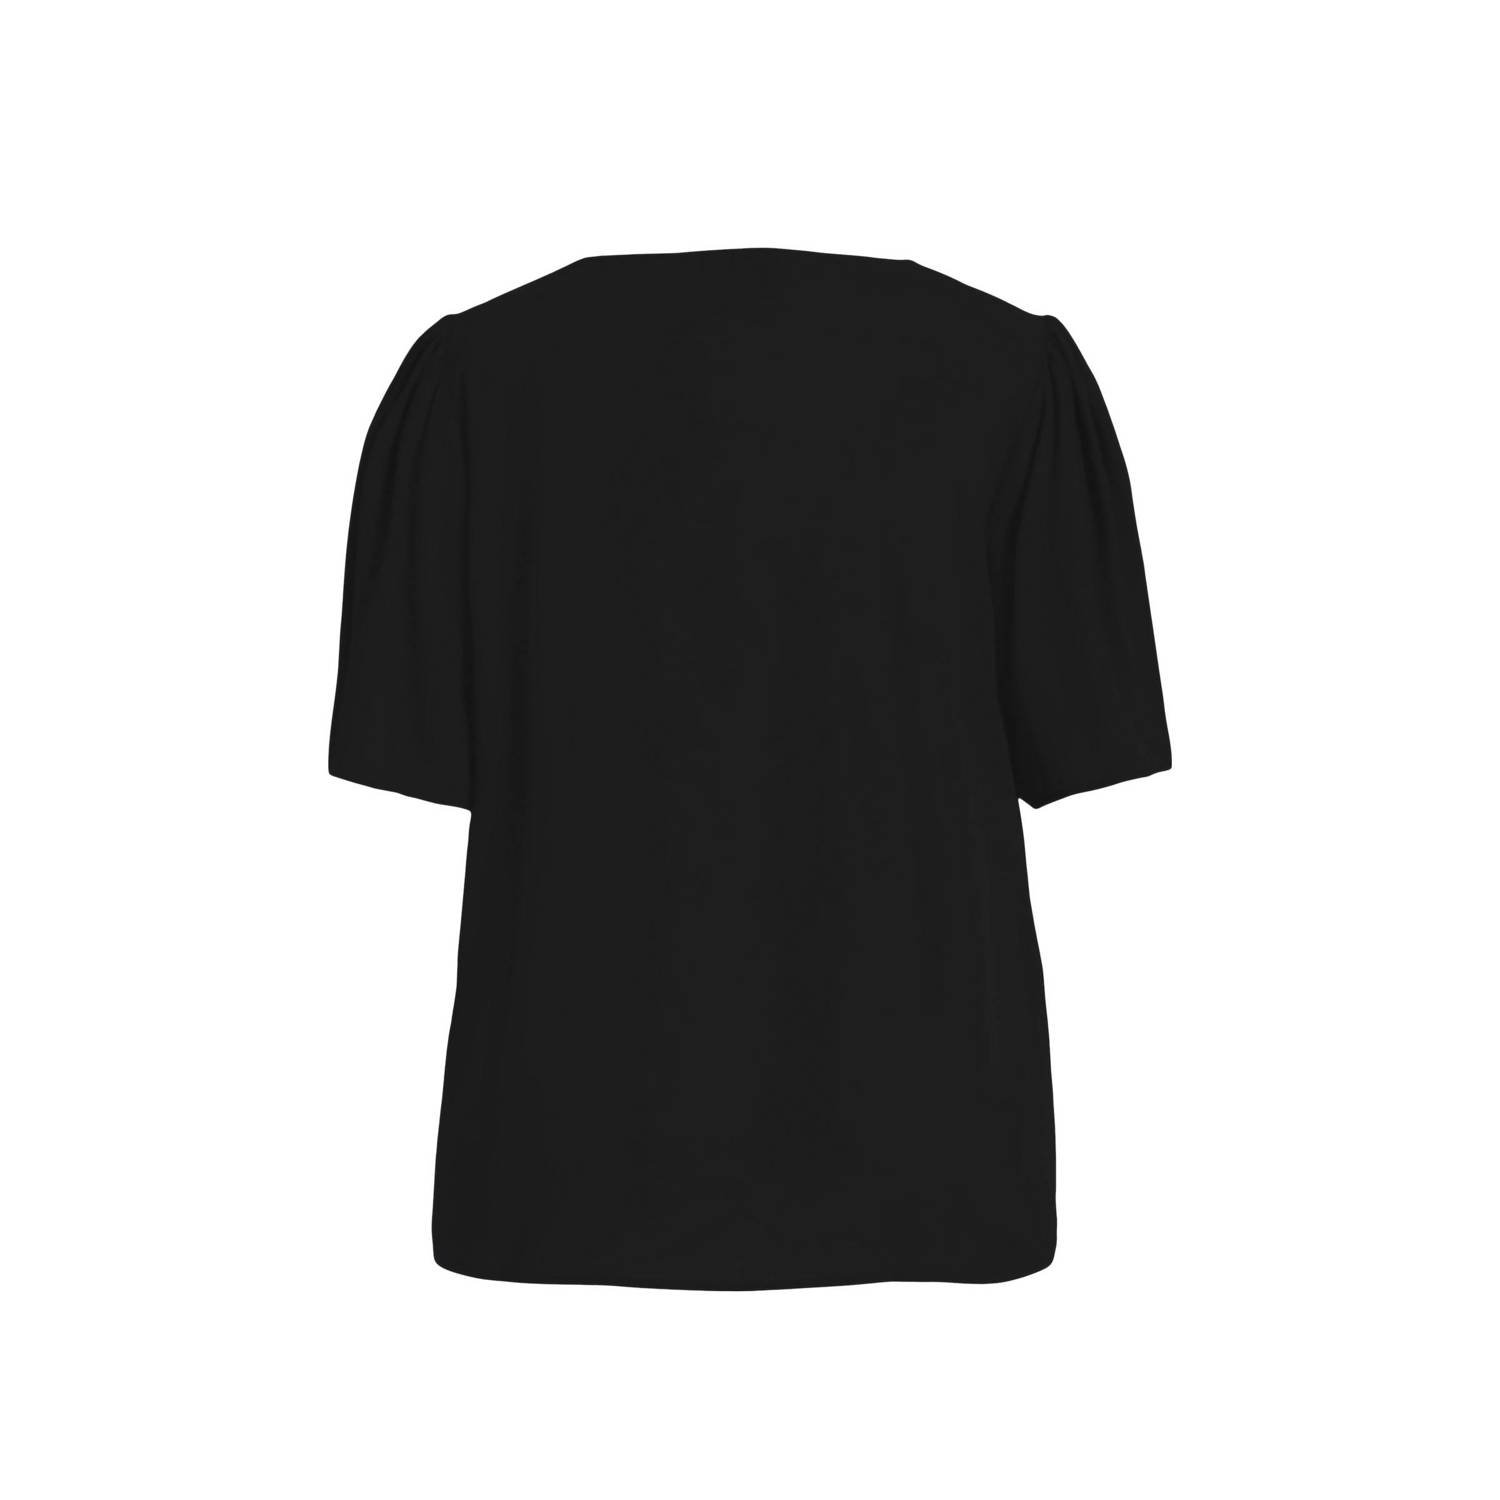 EVOKED VILA blousetop van gerecycled polyester zwart